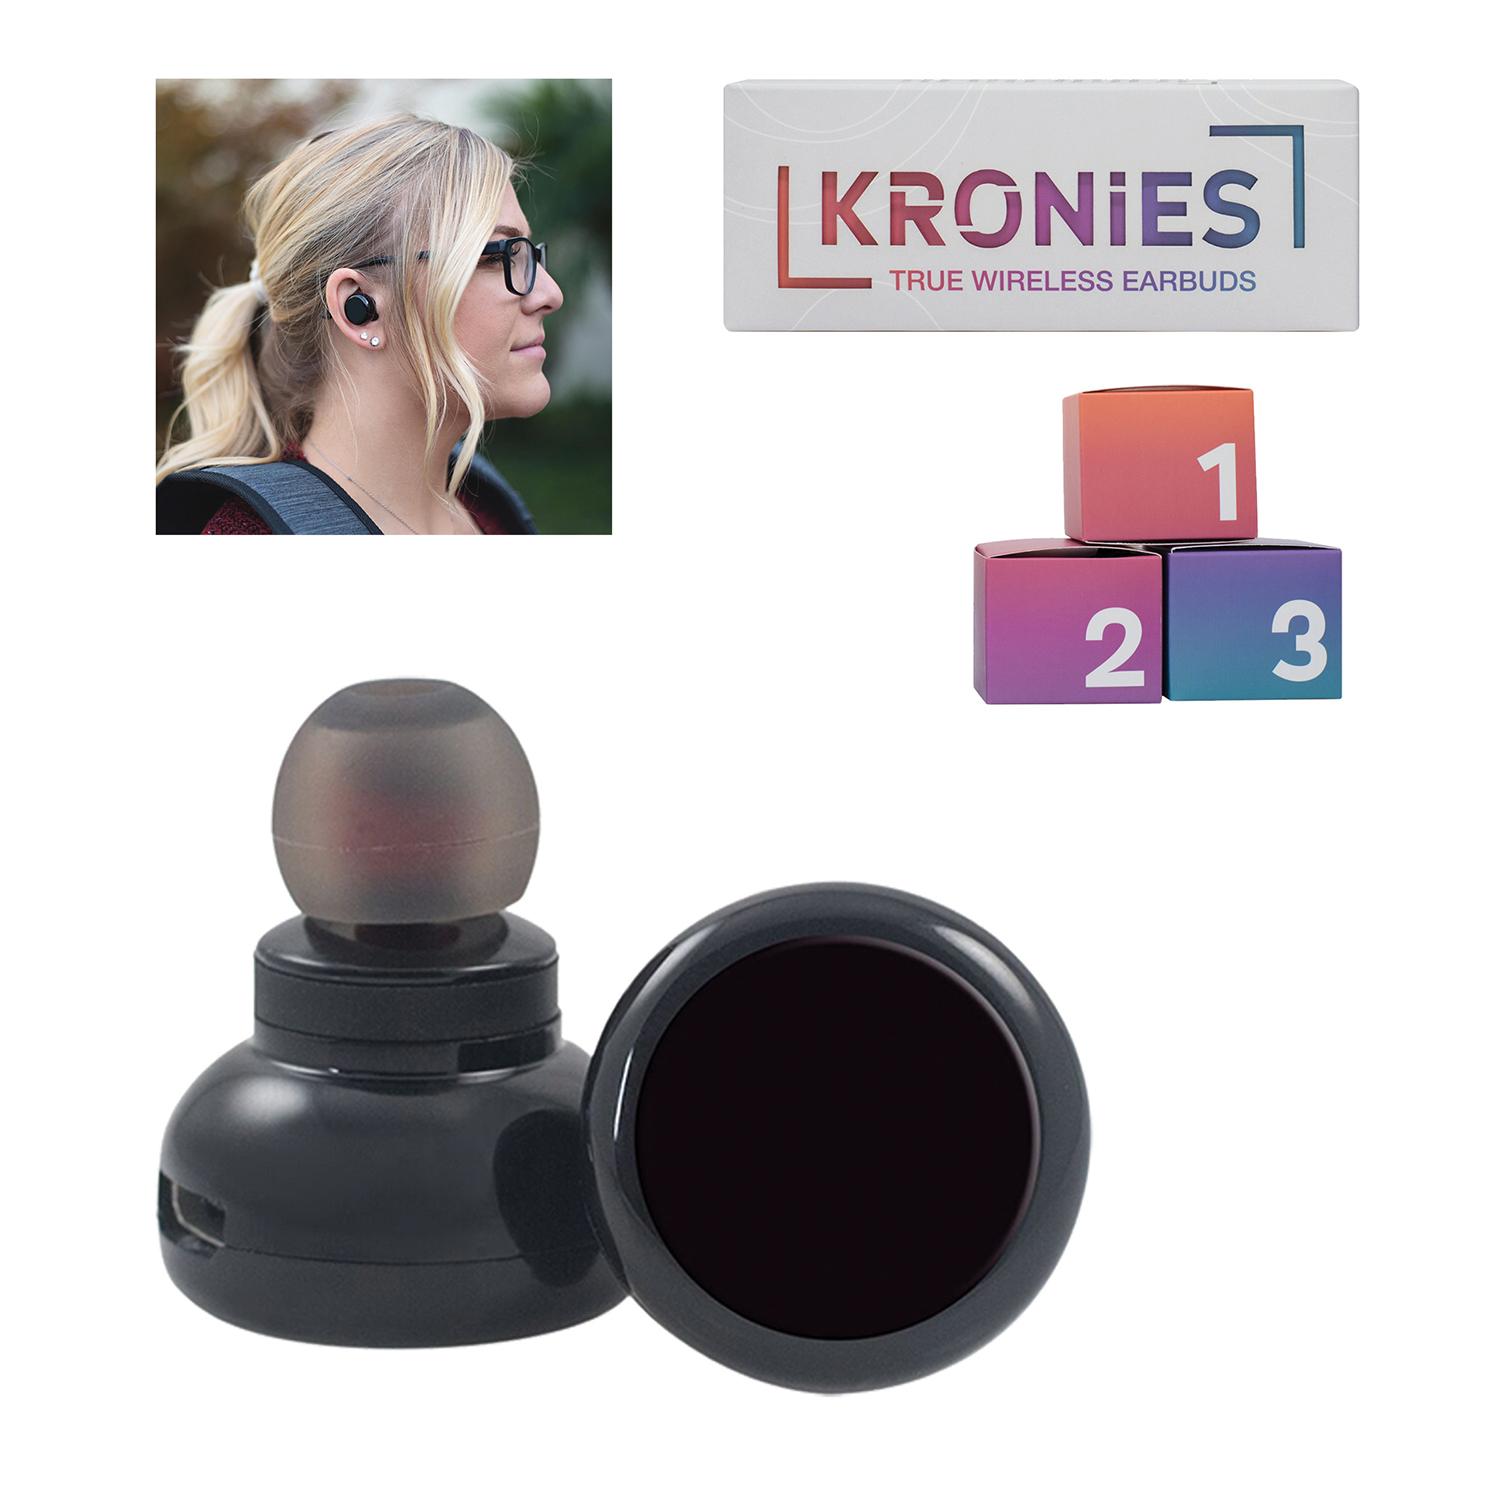 Picture of Kronies True Wireless Earbuds